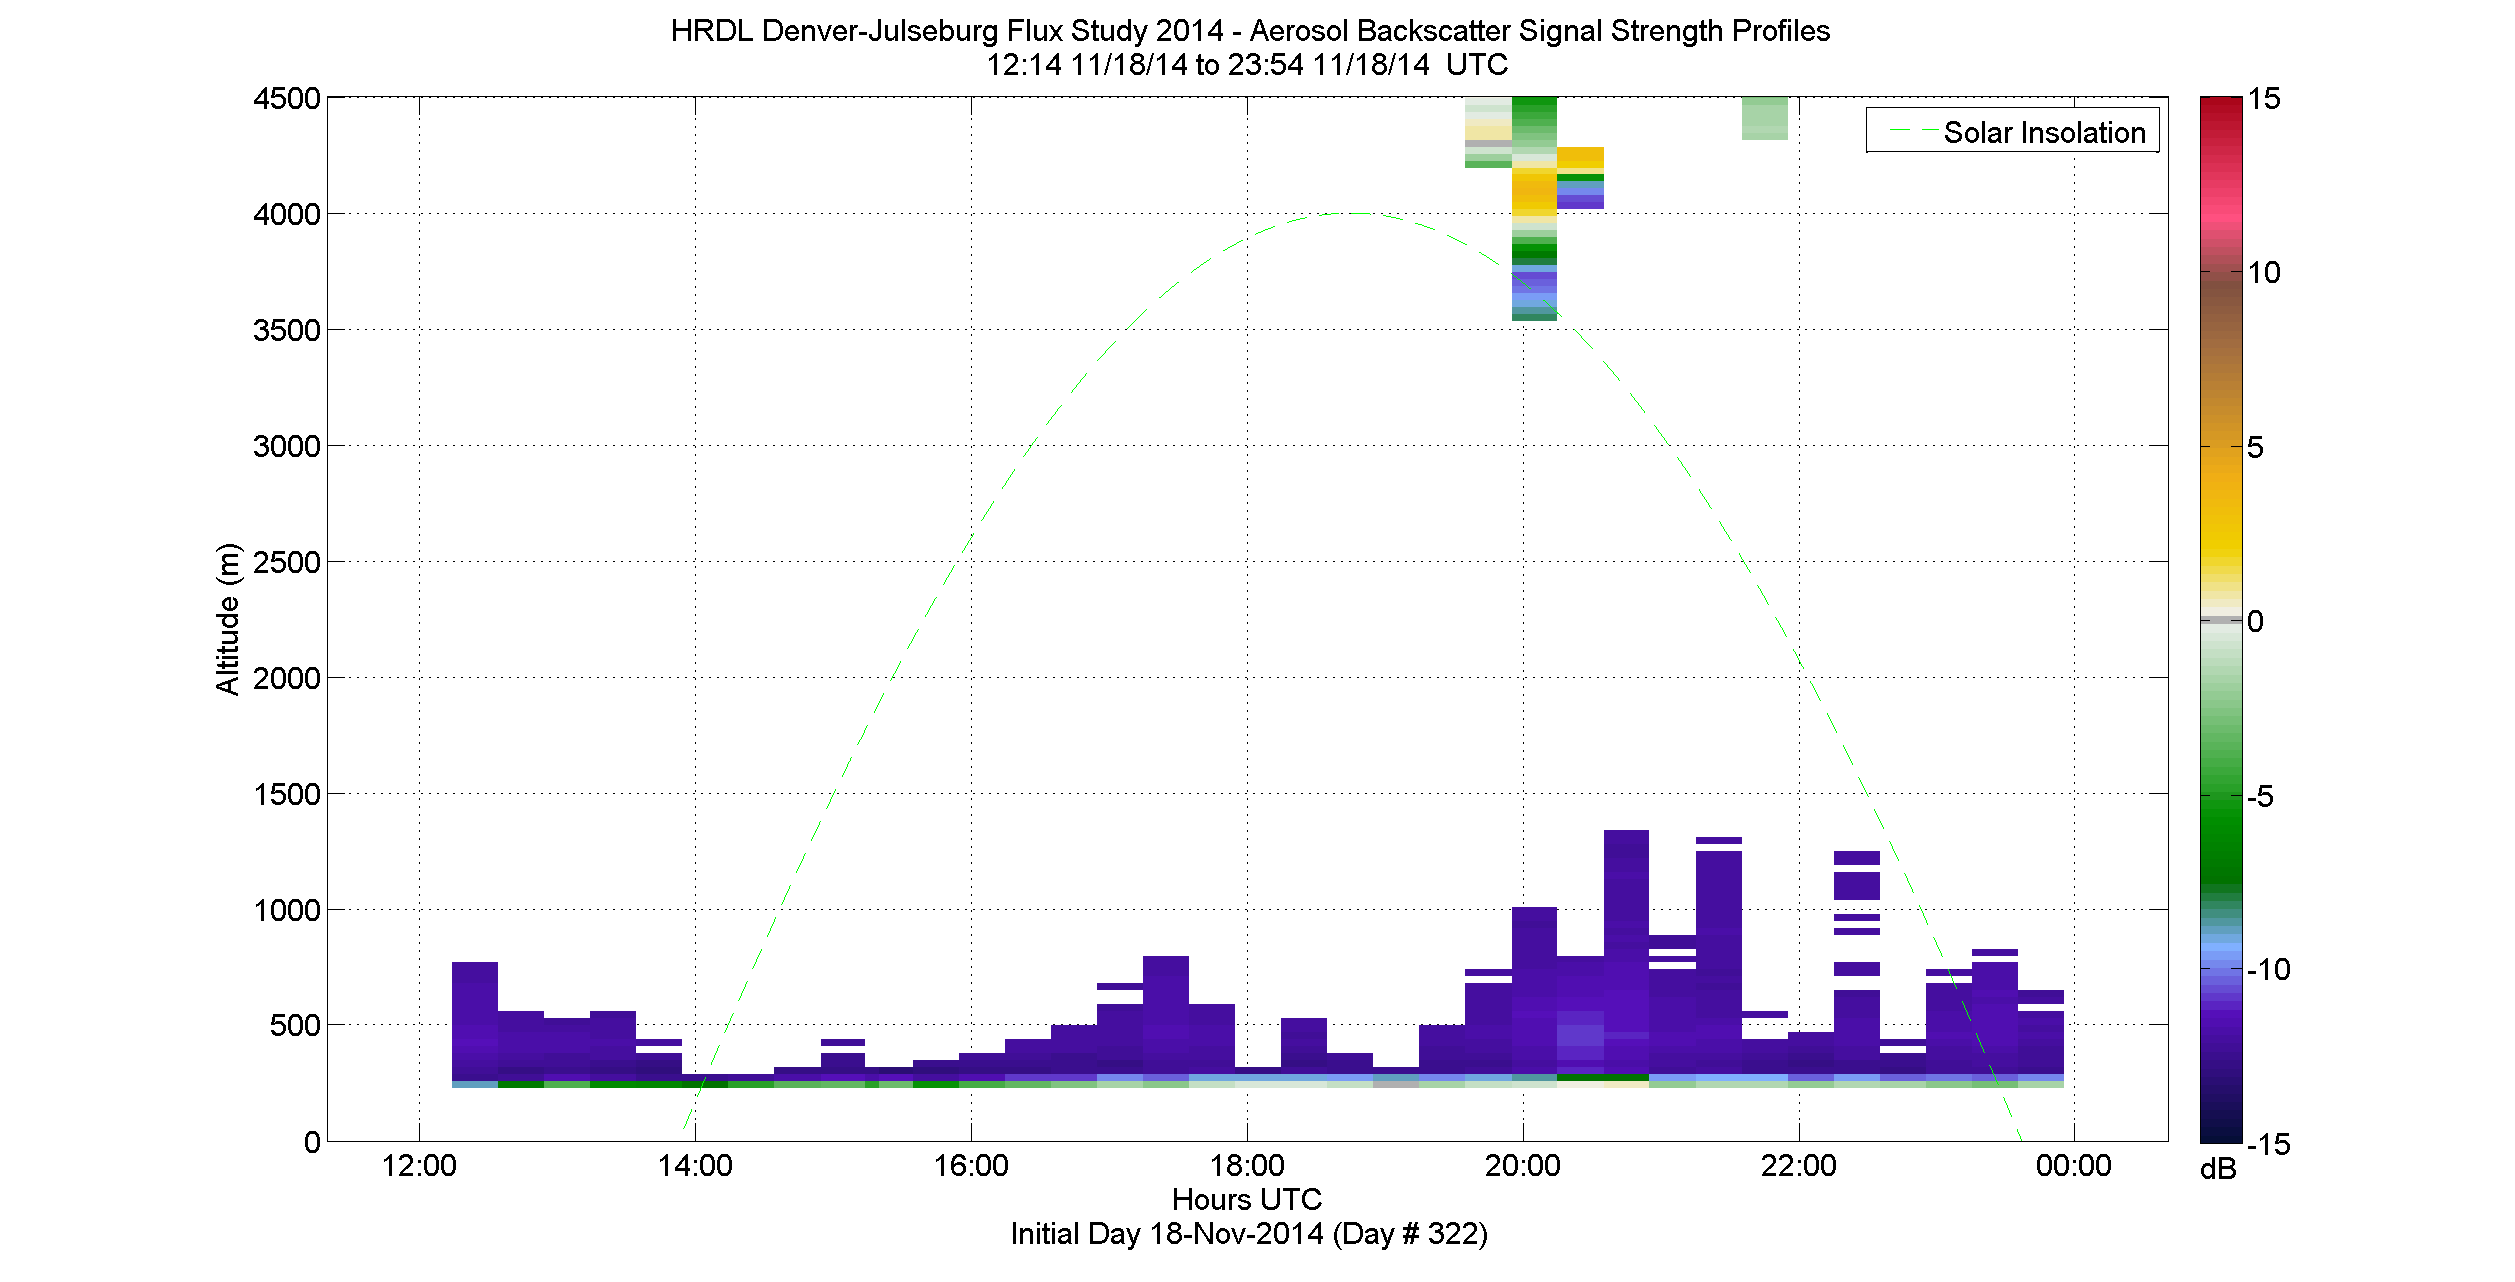 HRDL vertical intensity profile - November 18 pm